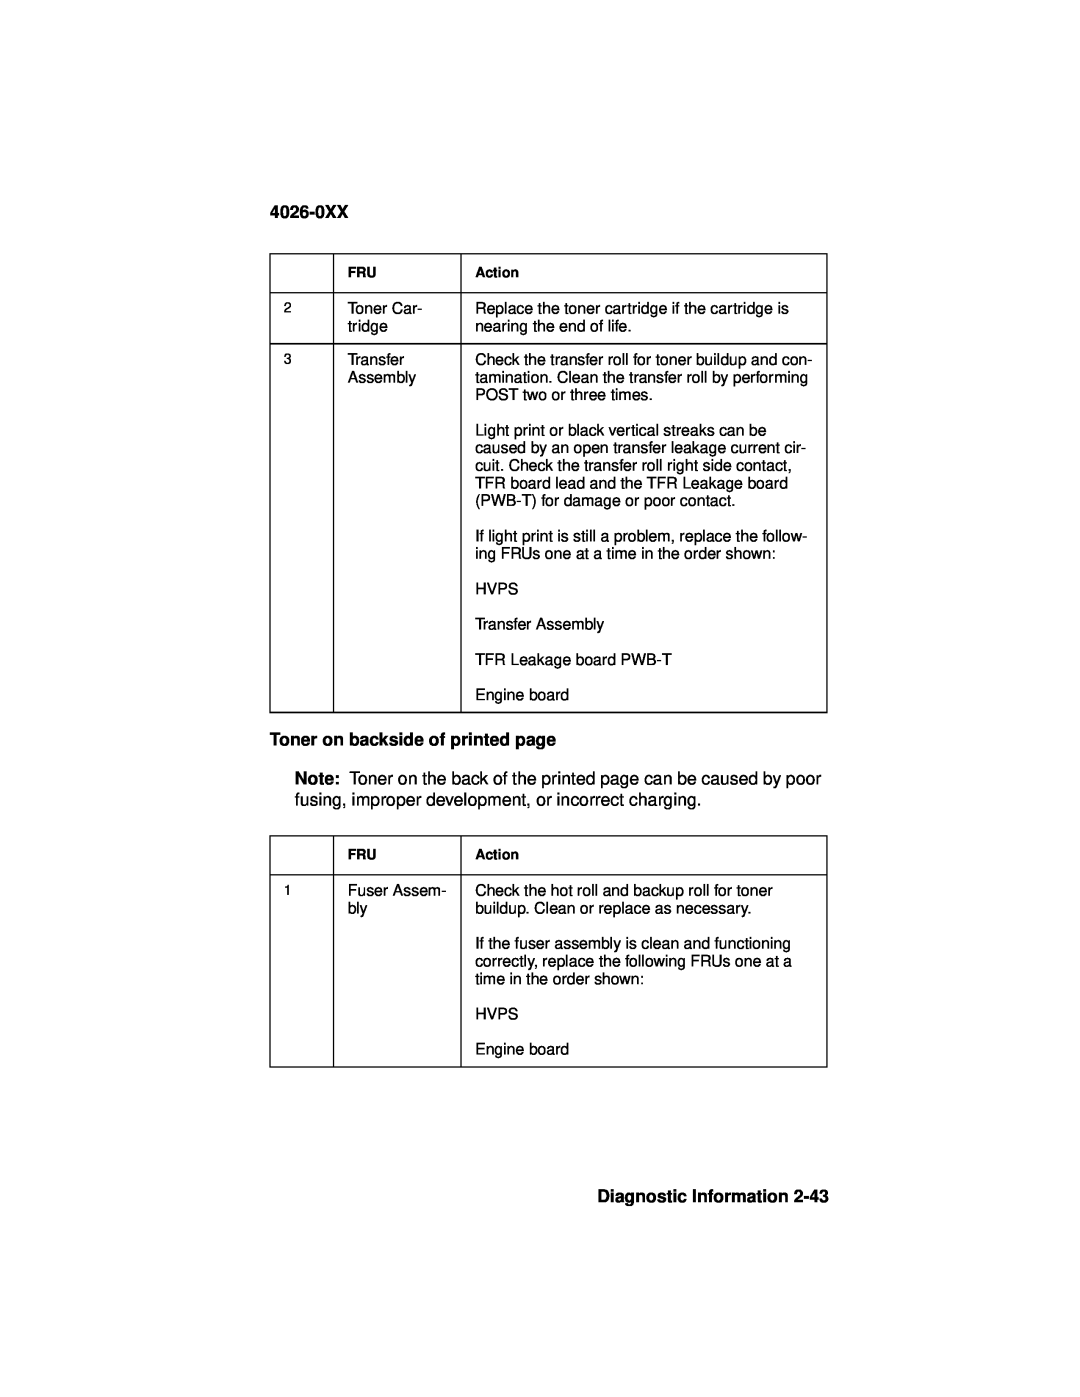 Lexmark 4026-0XX manual Toner on backside of printed page, Diagnostic Information 